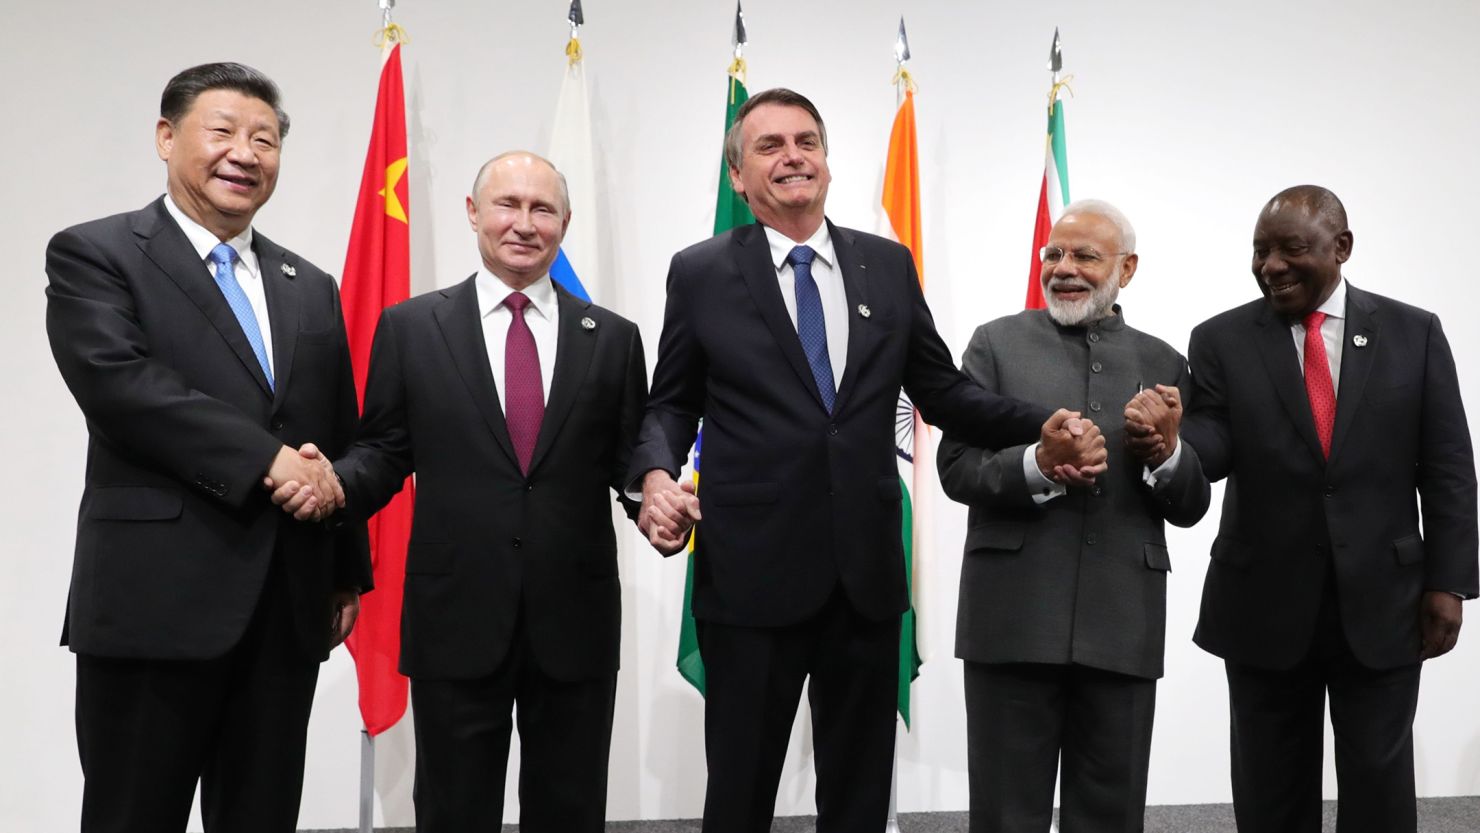 Chinese President Xi Jinping, Russian President Vladimir Putin, Brazilian President Jair Bolsonaro, India's Prime Minister Narendra Modi and South African President Cyril Ramaphosa pose during a BRICS meeting held during a G20 summit in Osaka in June 2019. 